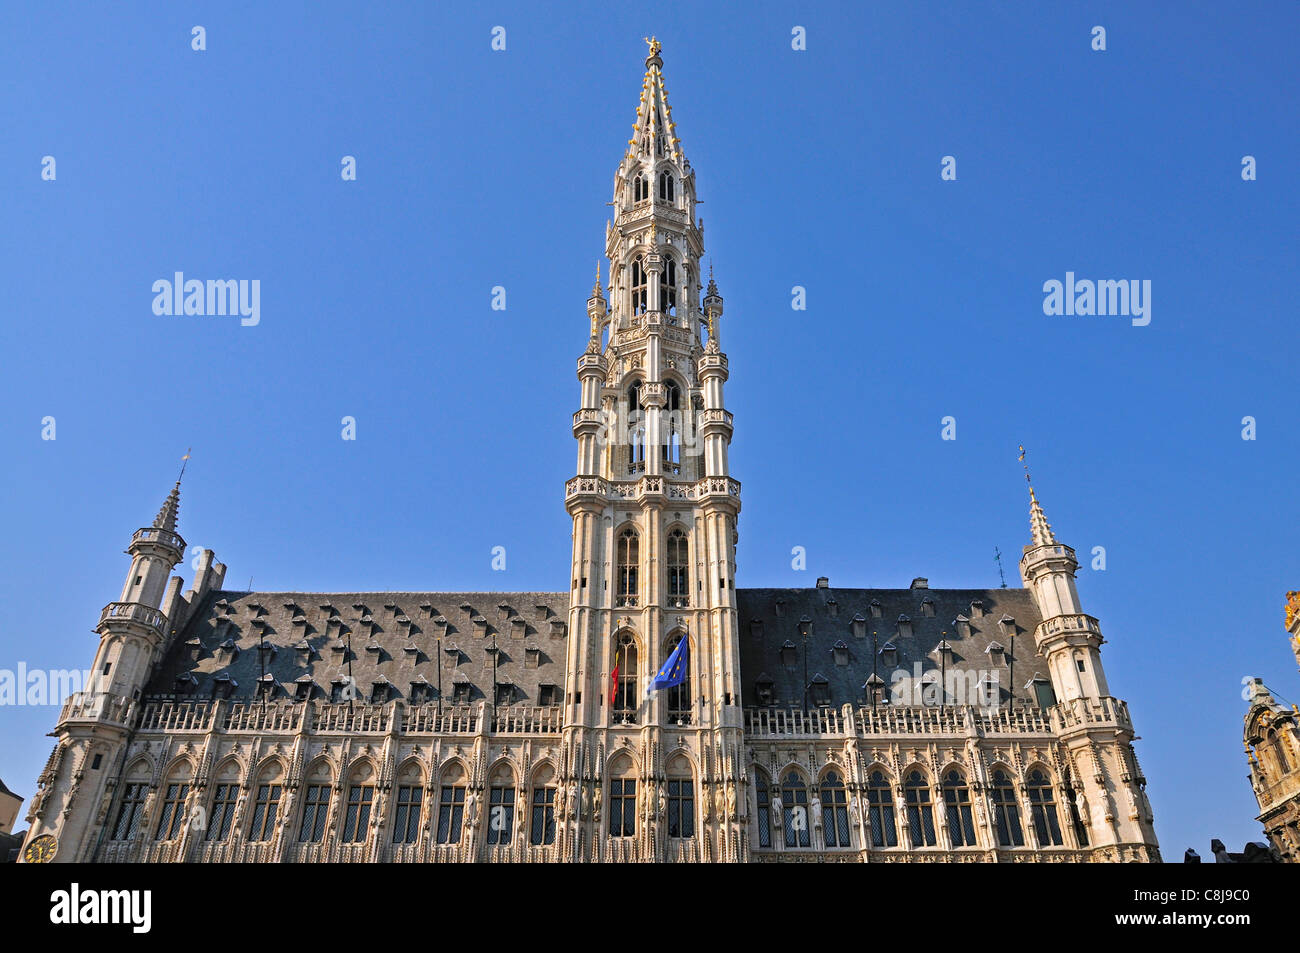 Architecture, Belgium, Benelux, Brussels, Europe, Gothic, capital, city hall, landmark, city administration, UNESCO, administrat Stock Photo